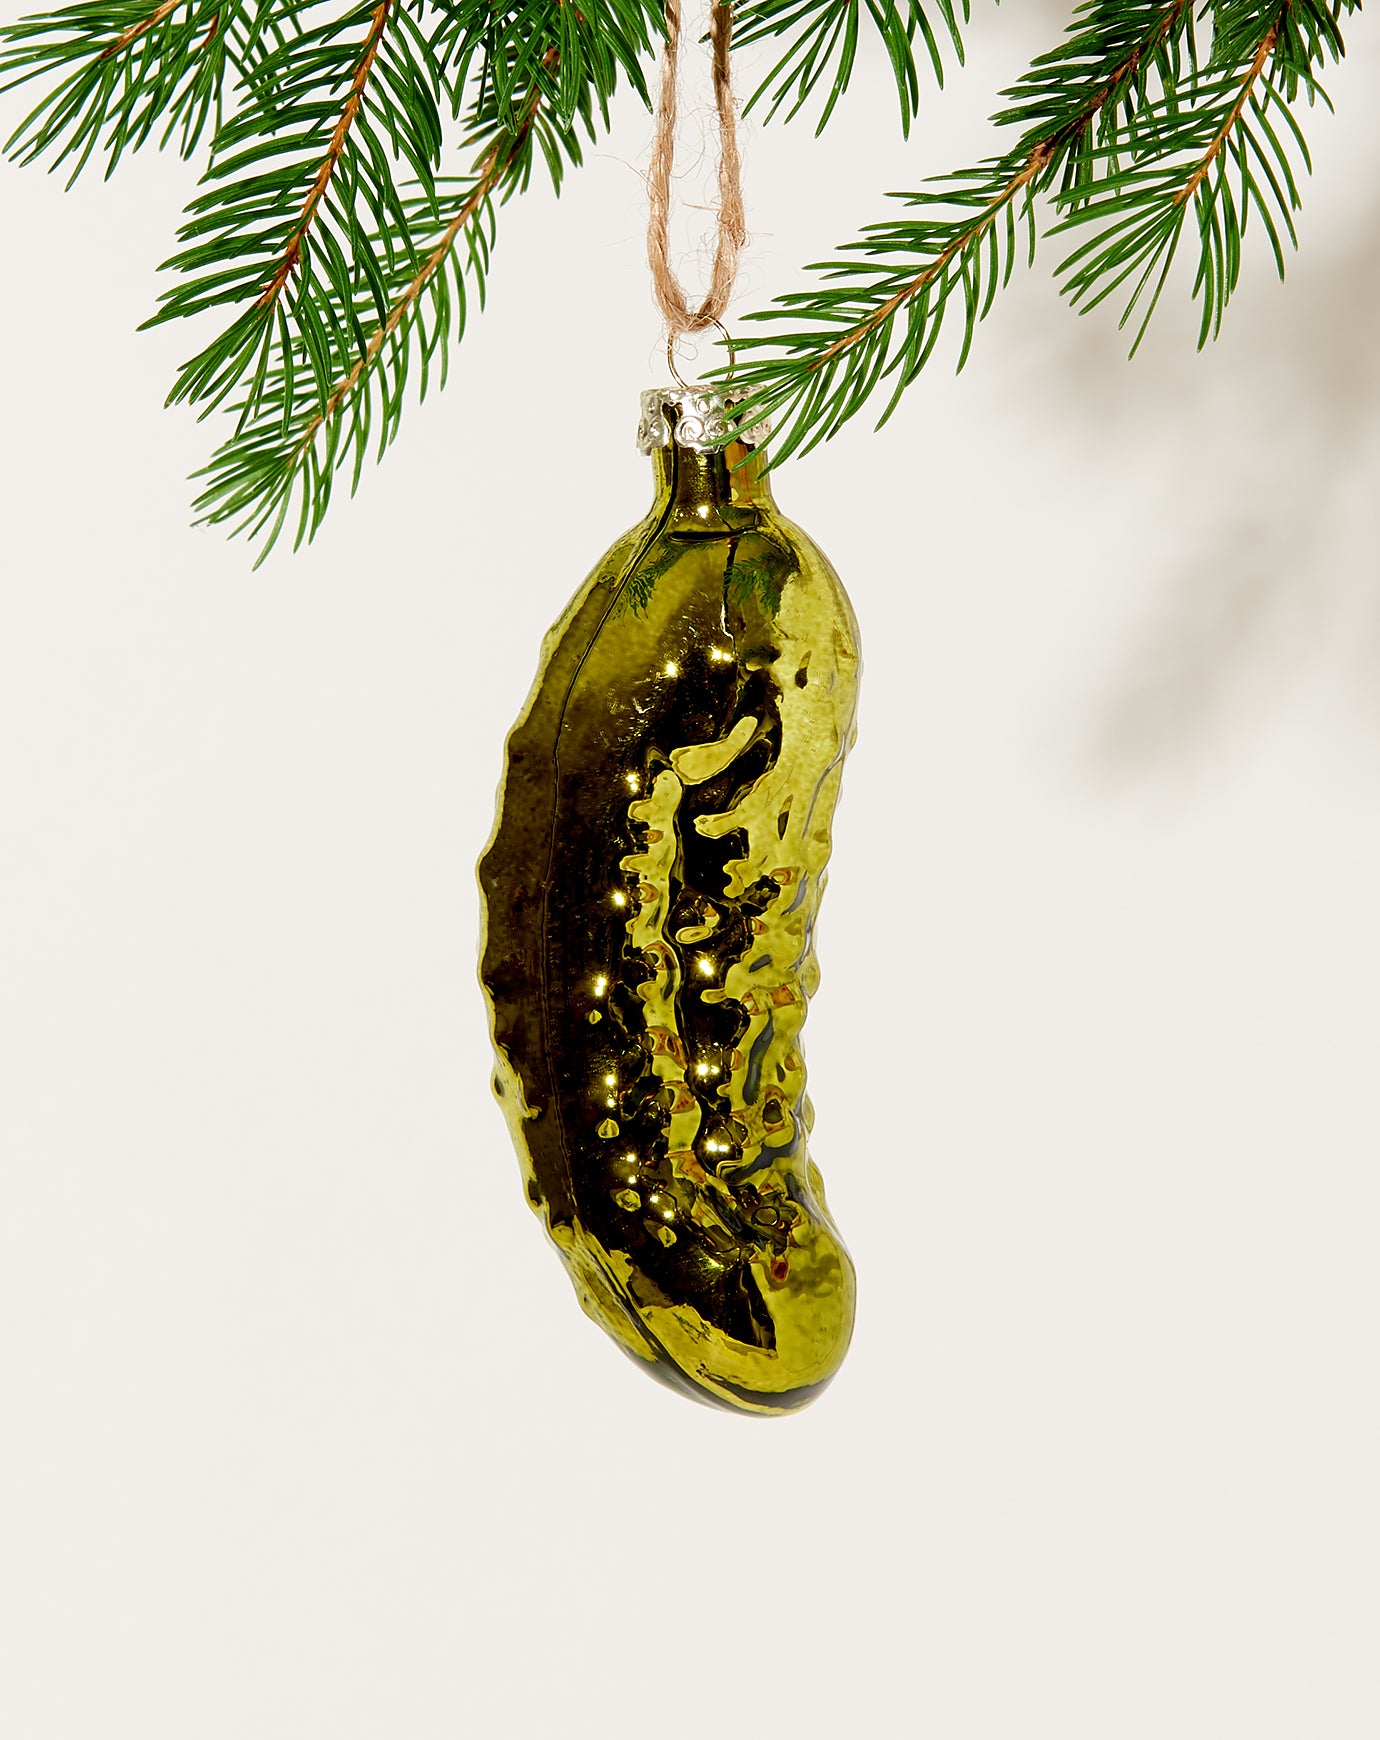 Cody Foster Shiny Pickle Ornament